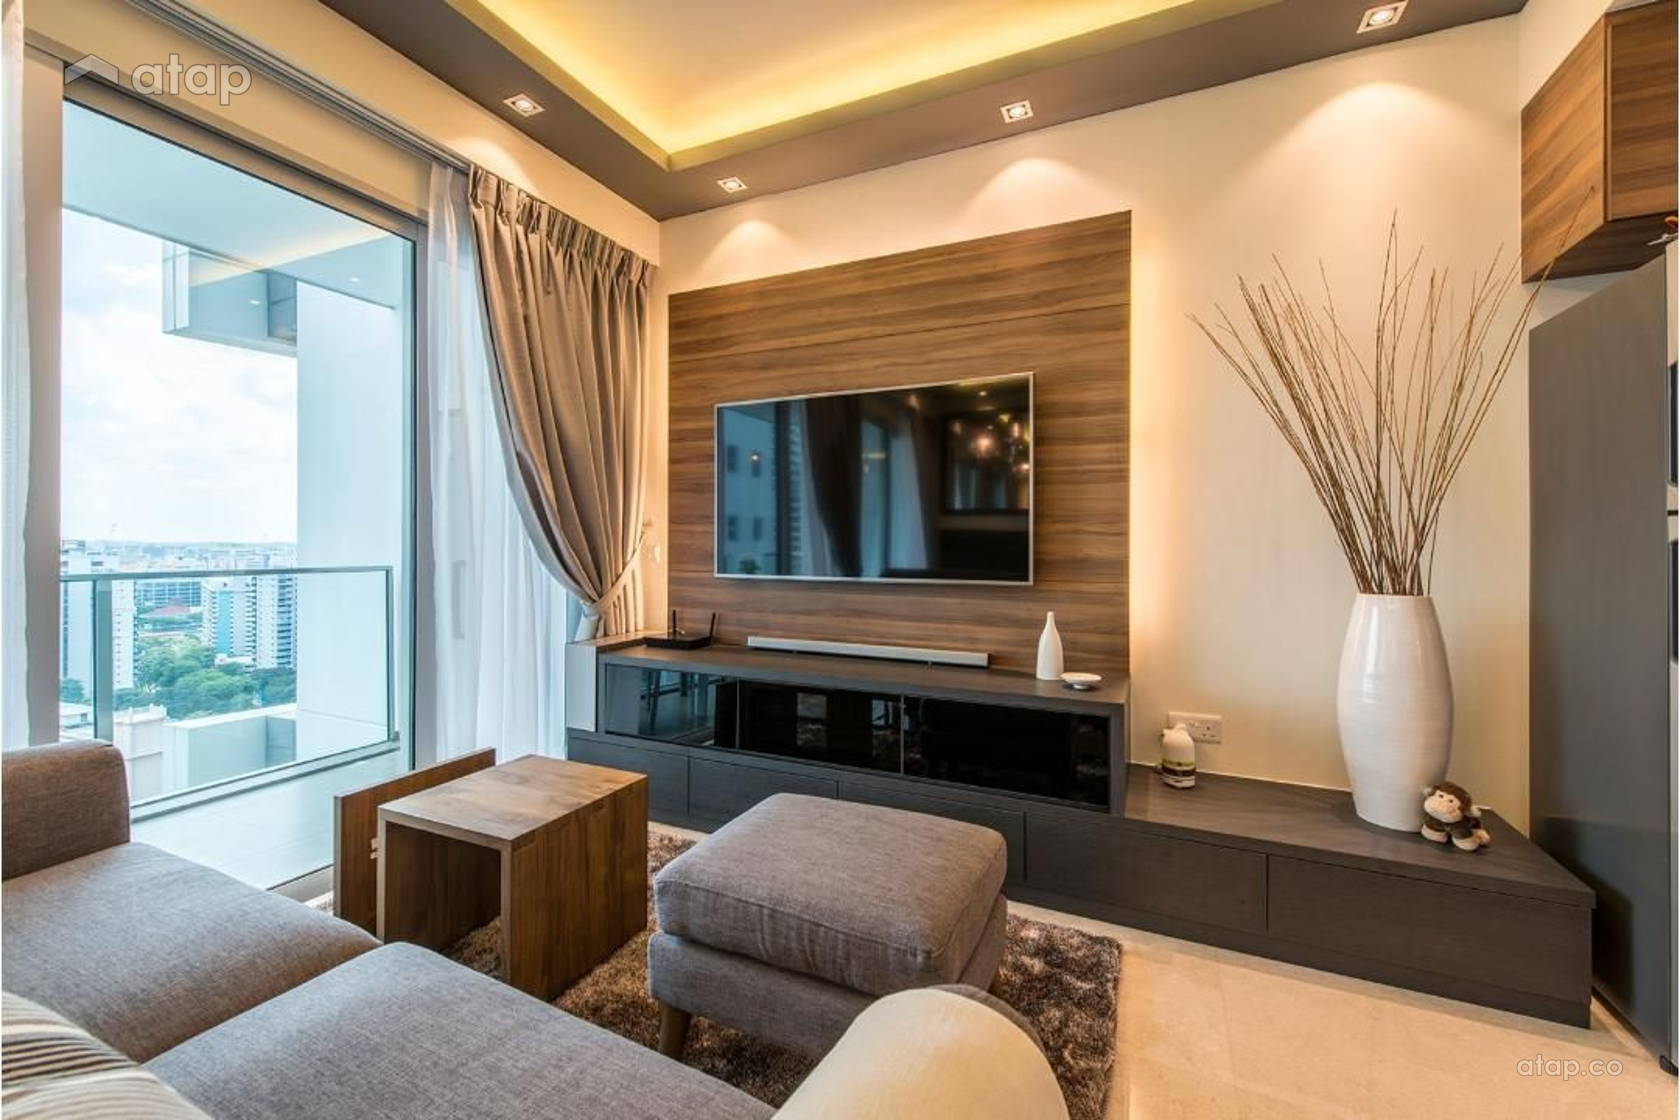 wallpaper malaysia design,living room,room,interior design,property,furniture